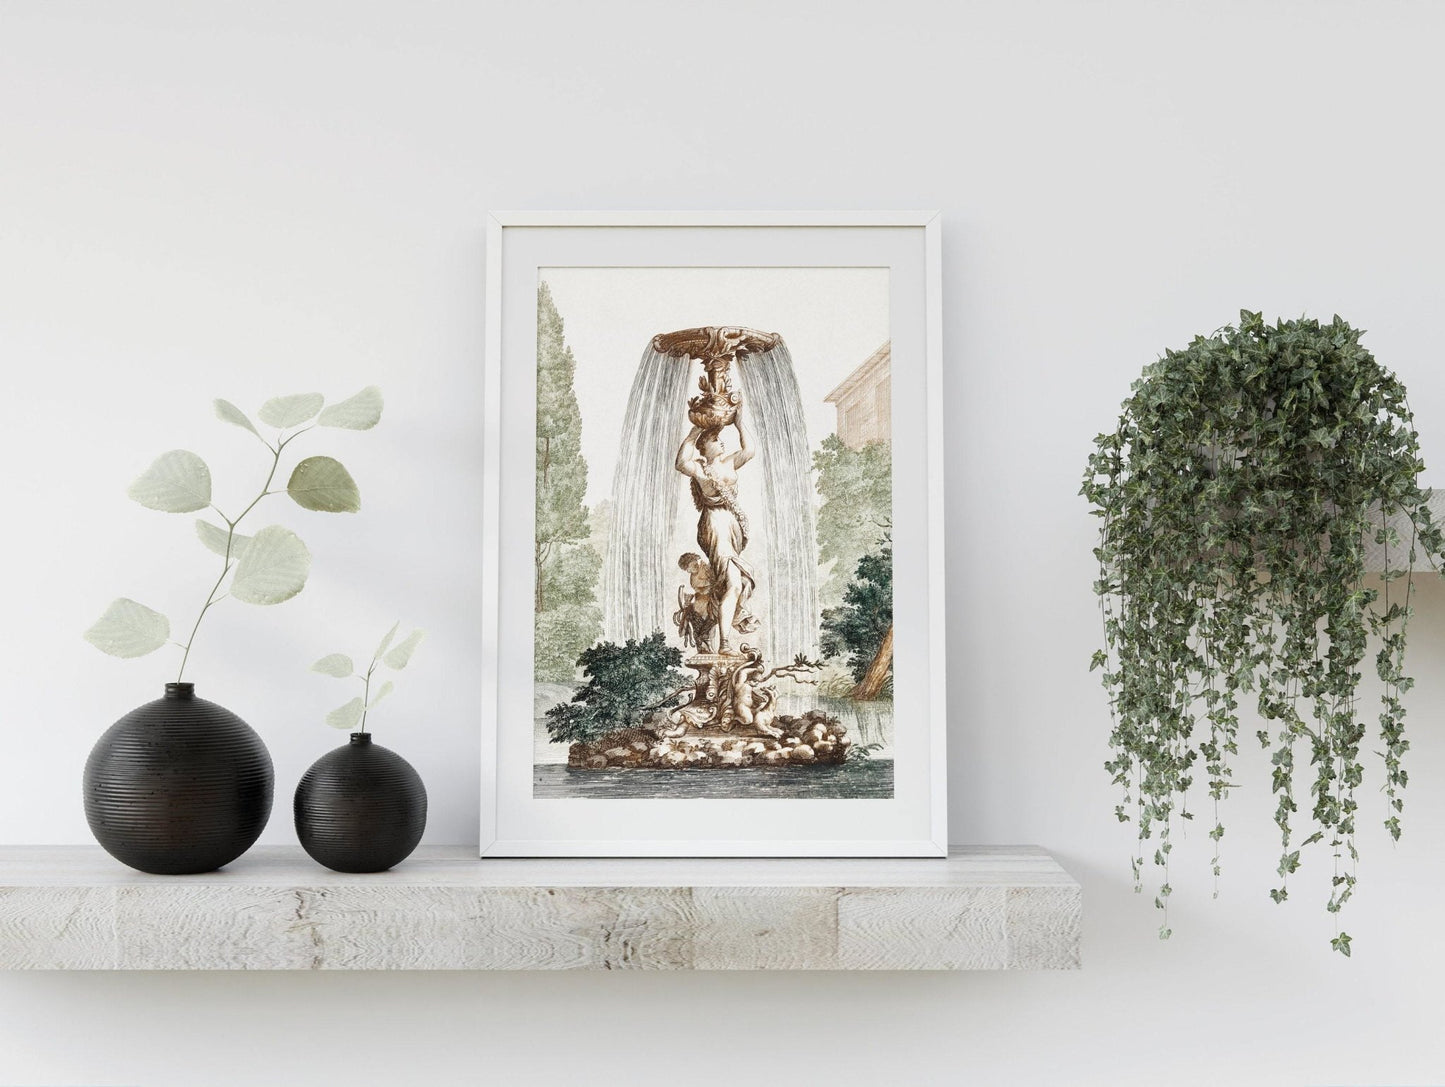 JOHAN TEYLER - Brunnen mit Venus und Amor (À La Poupée)